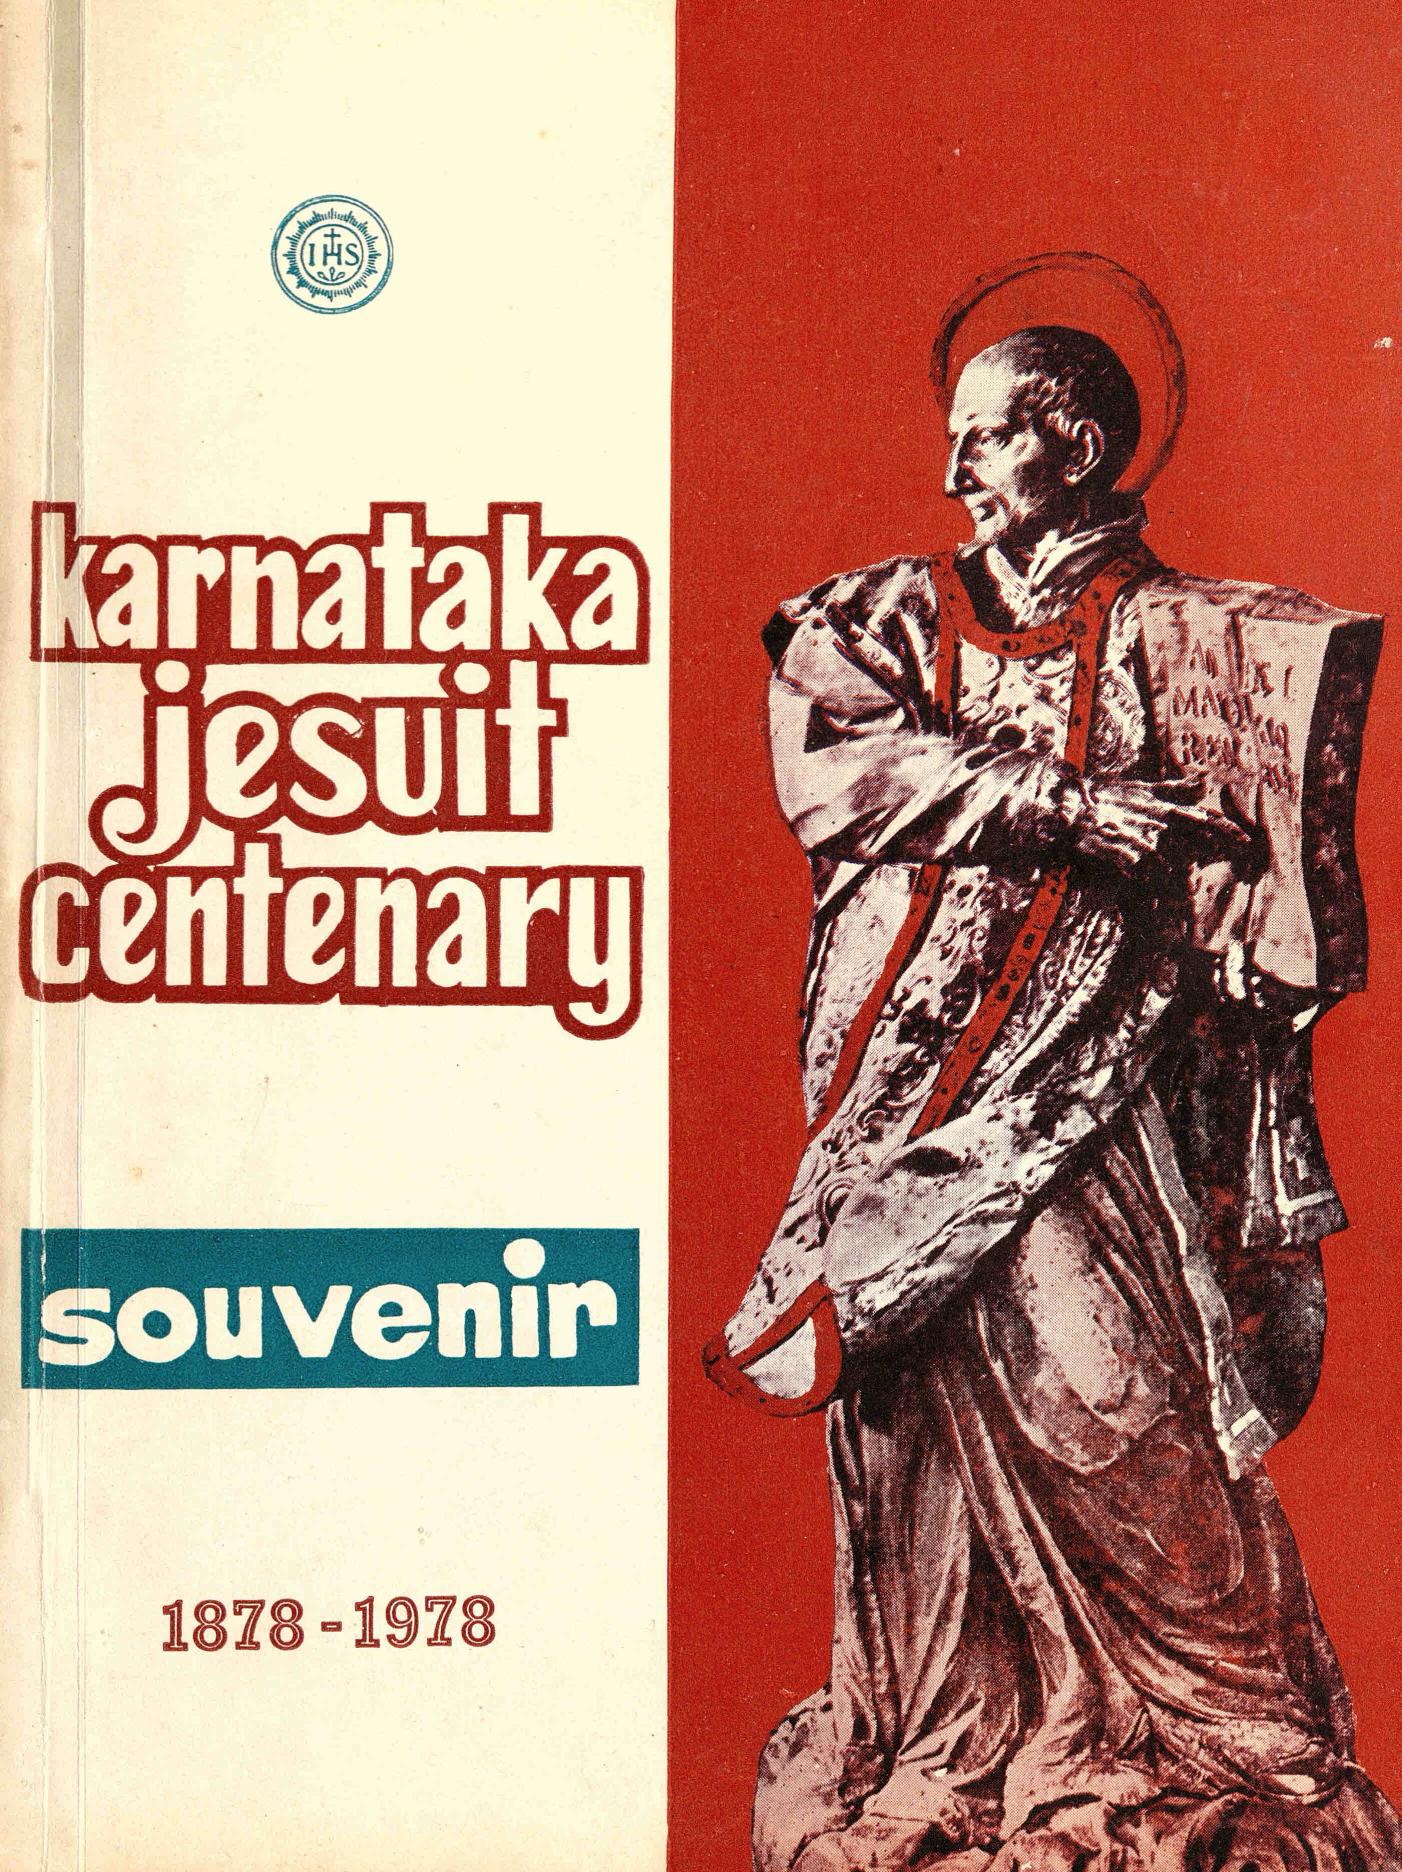 1978 - Karnataka Jesuit Centenary Souvenir